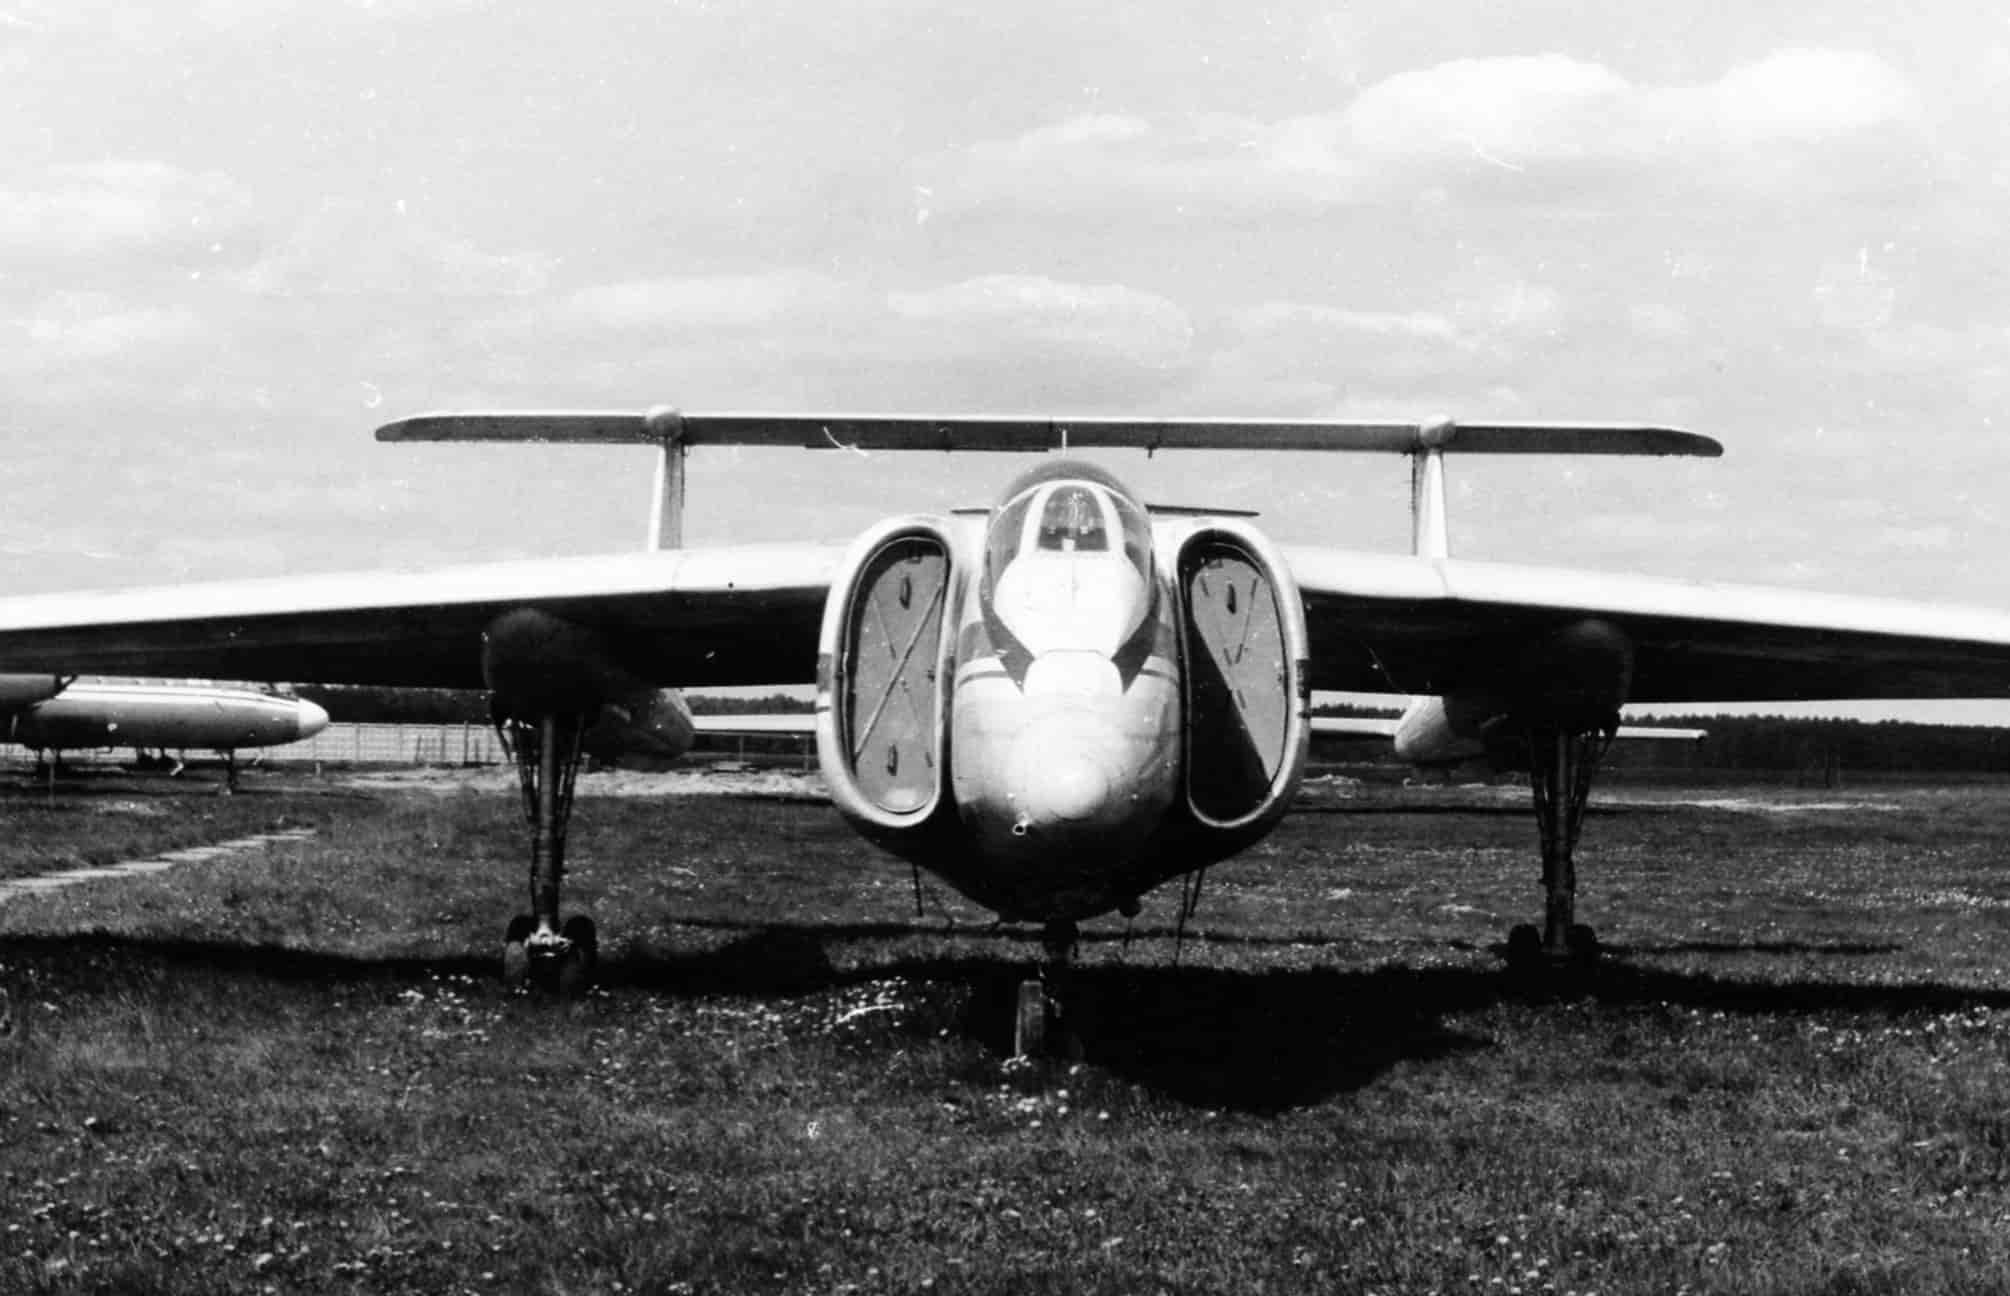 борт СССР-17103, вид спереди, самолет М-17